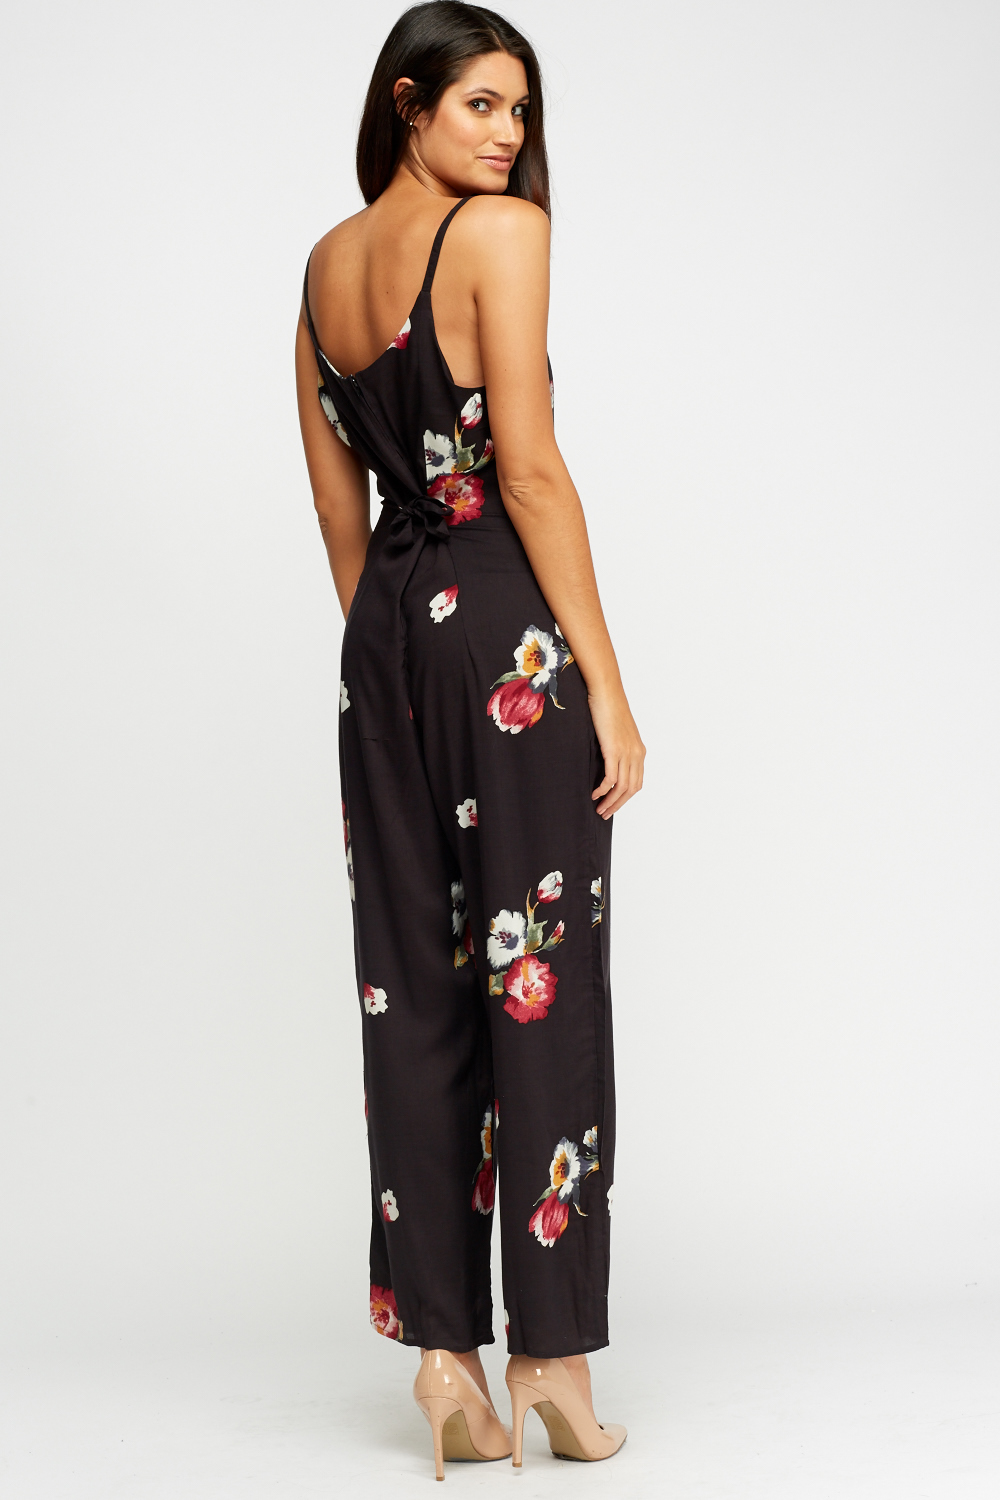 Black Flower Print Jumpsuit - Just $7